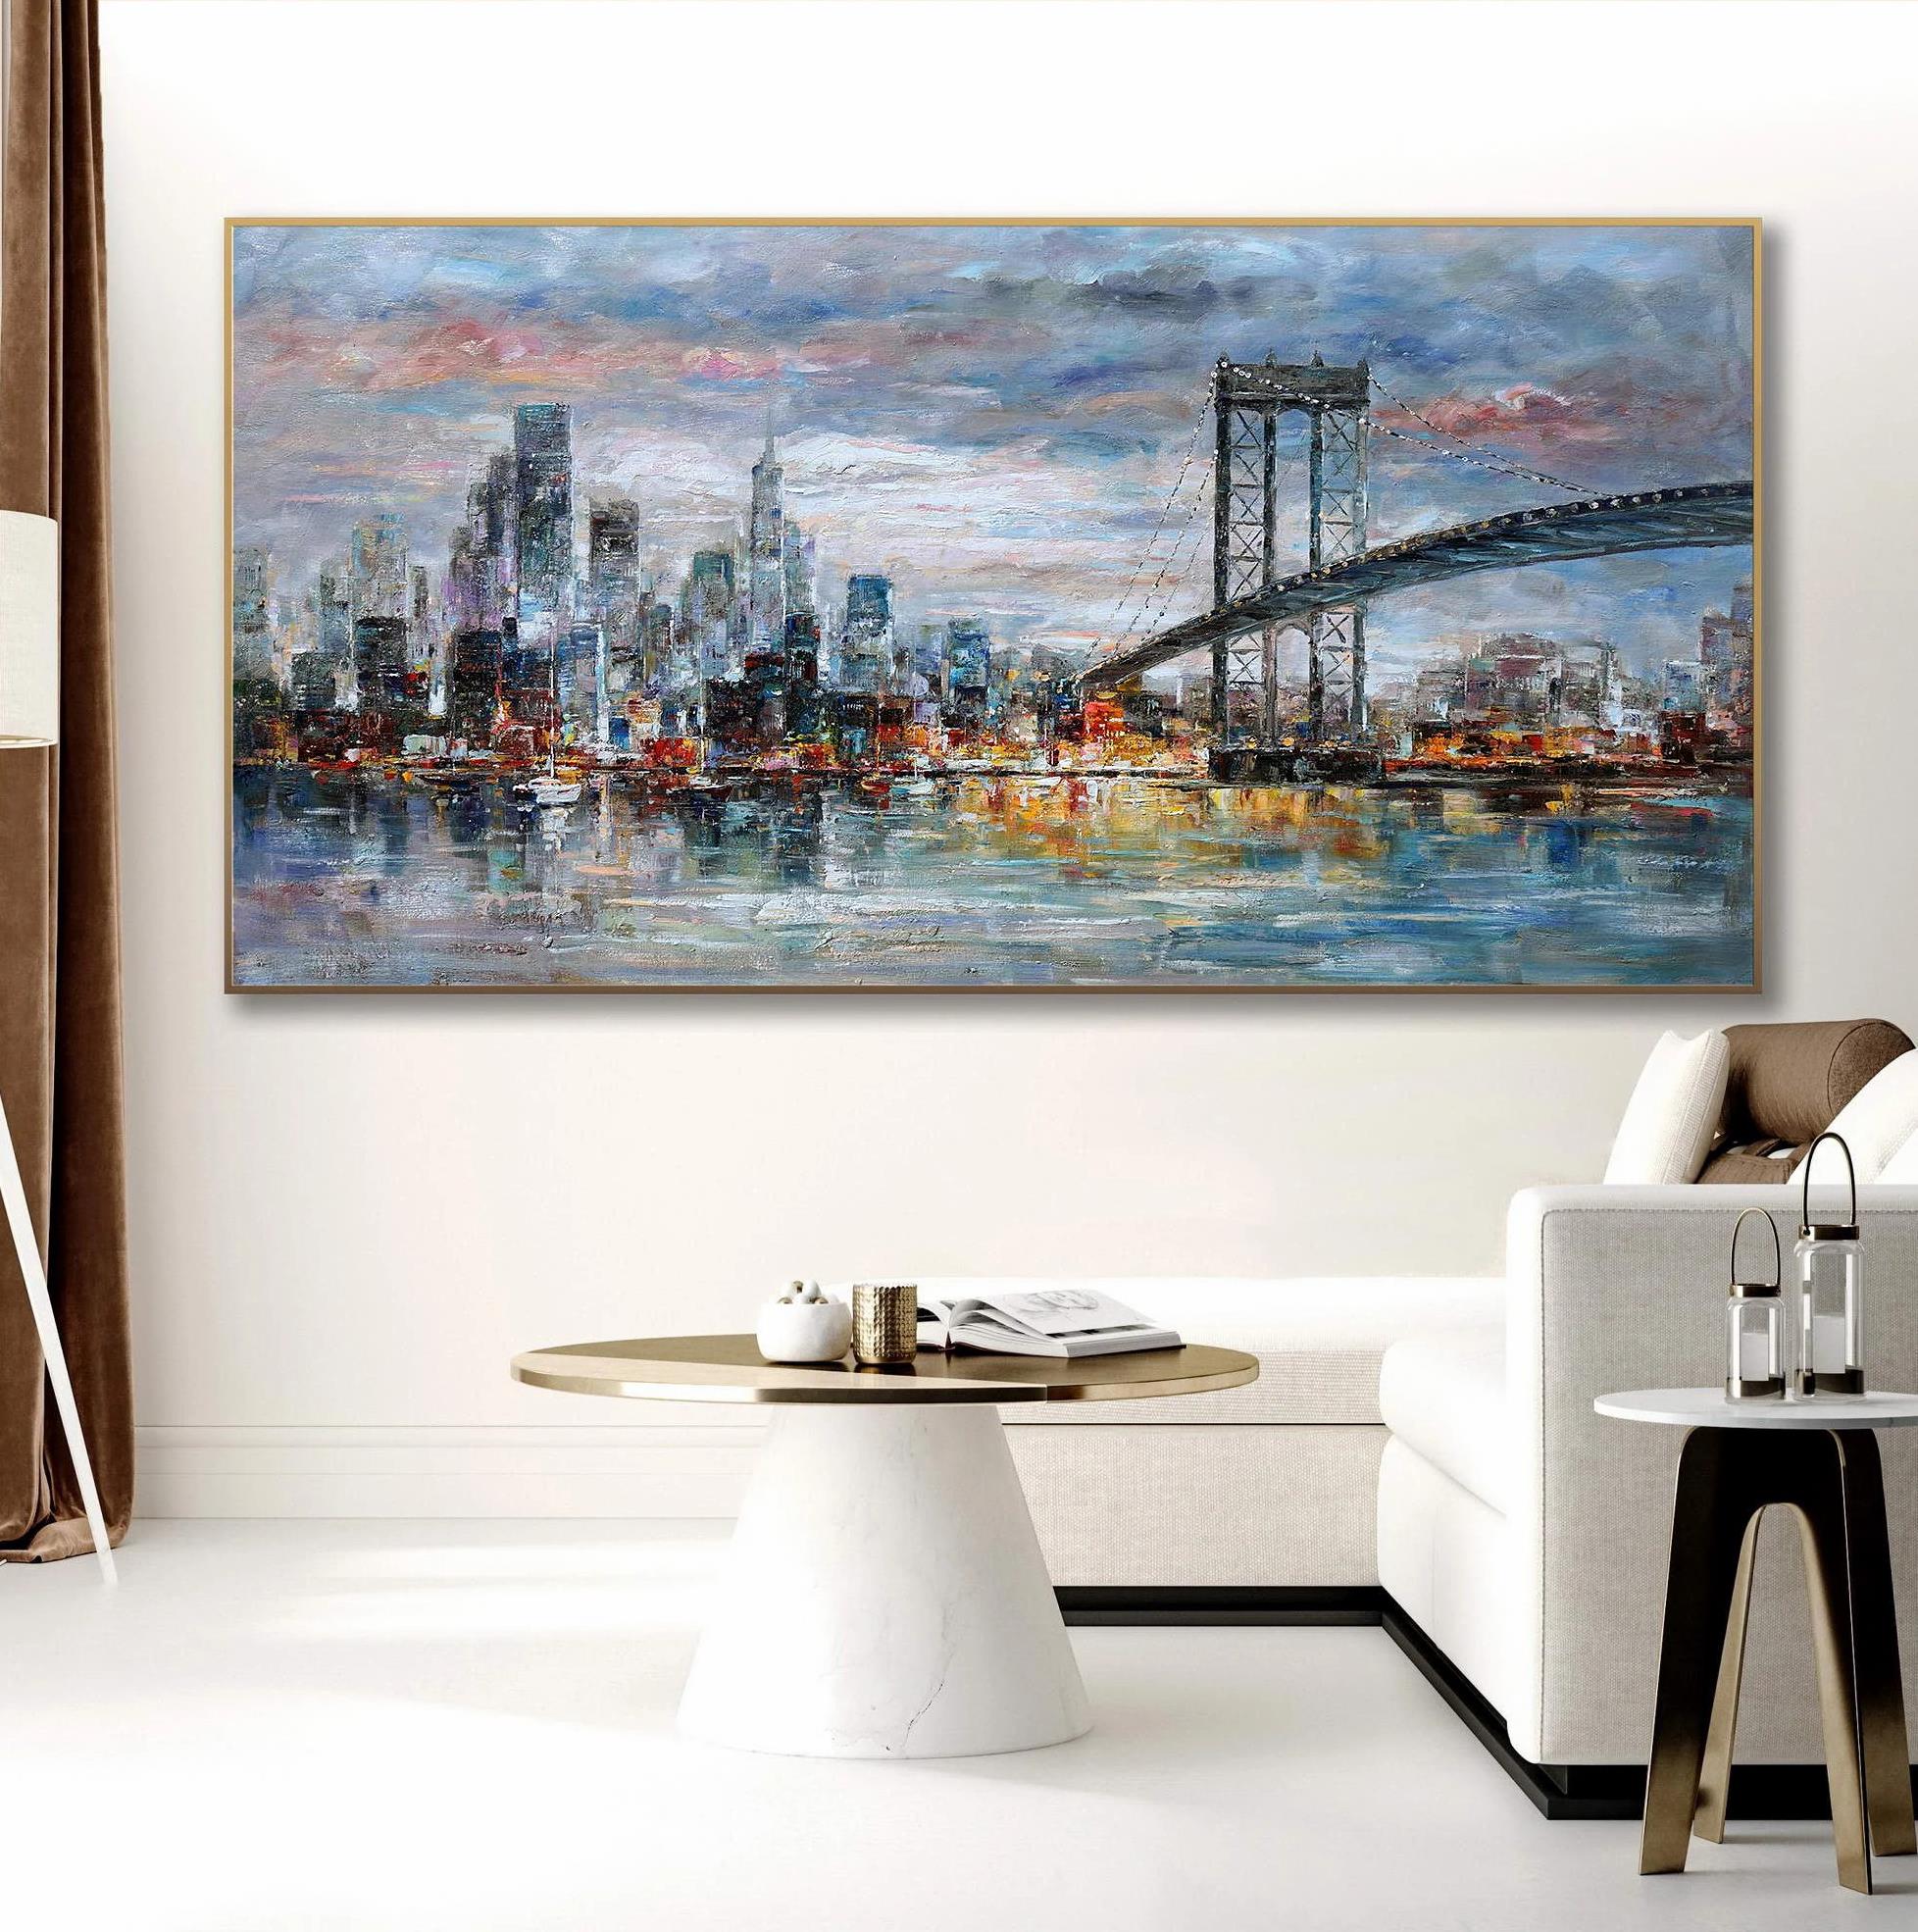 New York Manhattan Brooklyn Bridge NYC Skyline paysage urbain texture urbaine Peintures à l'huile